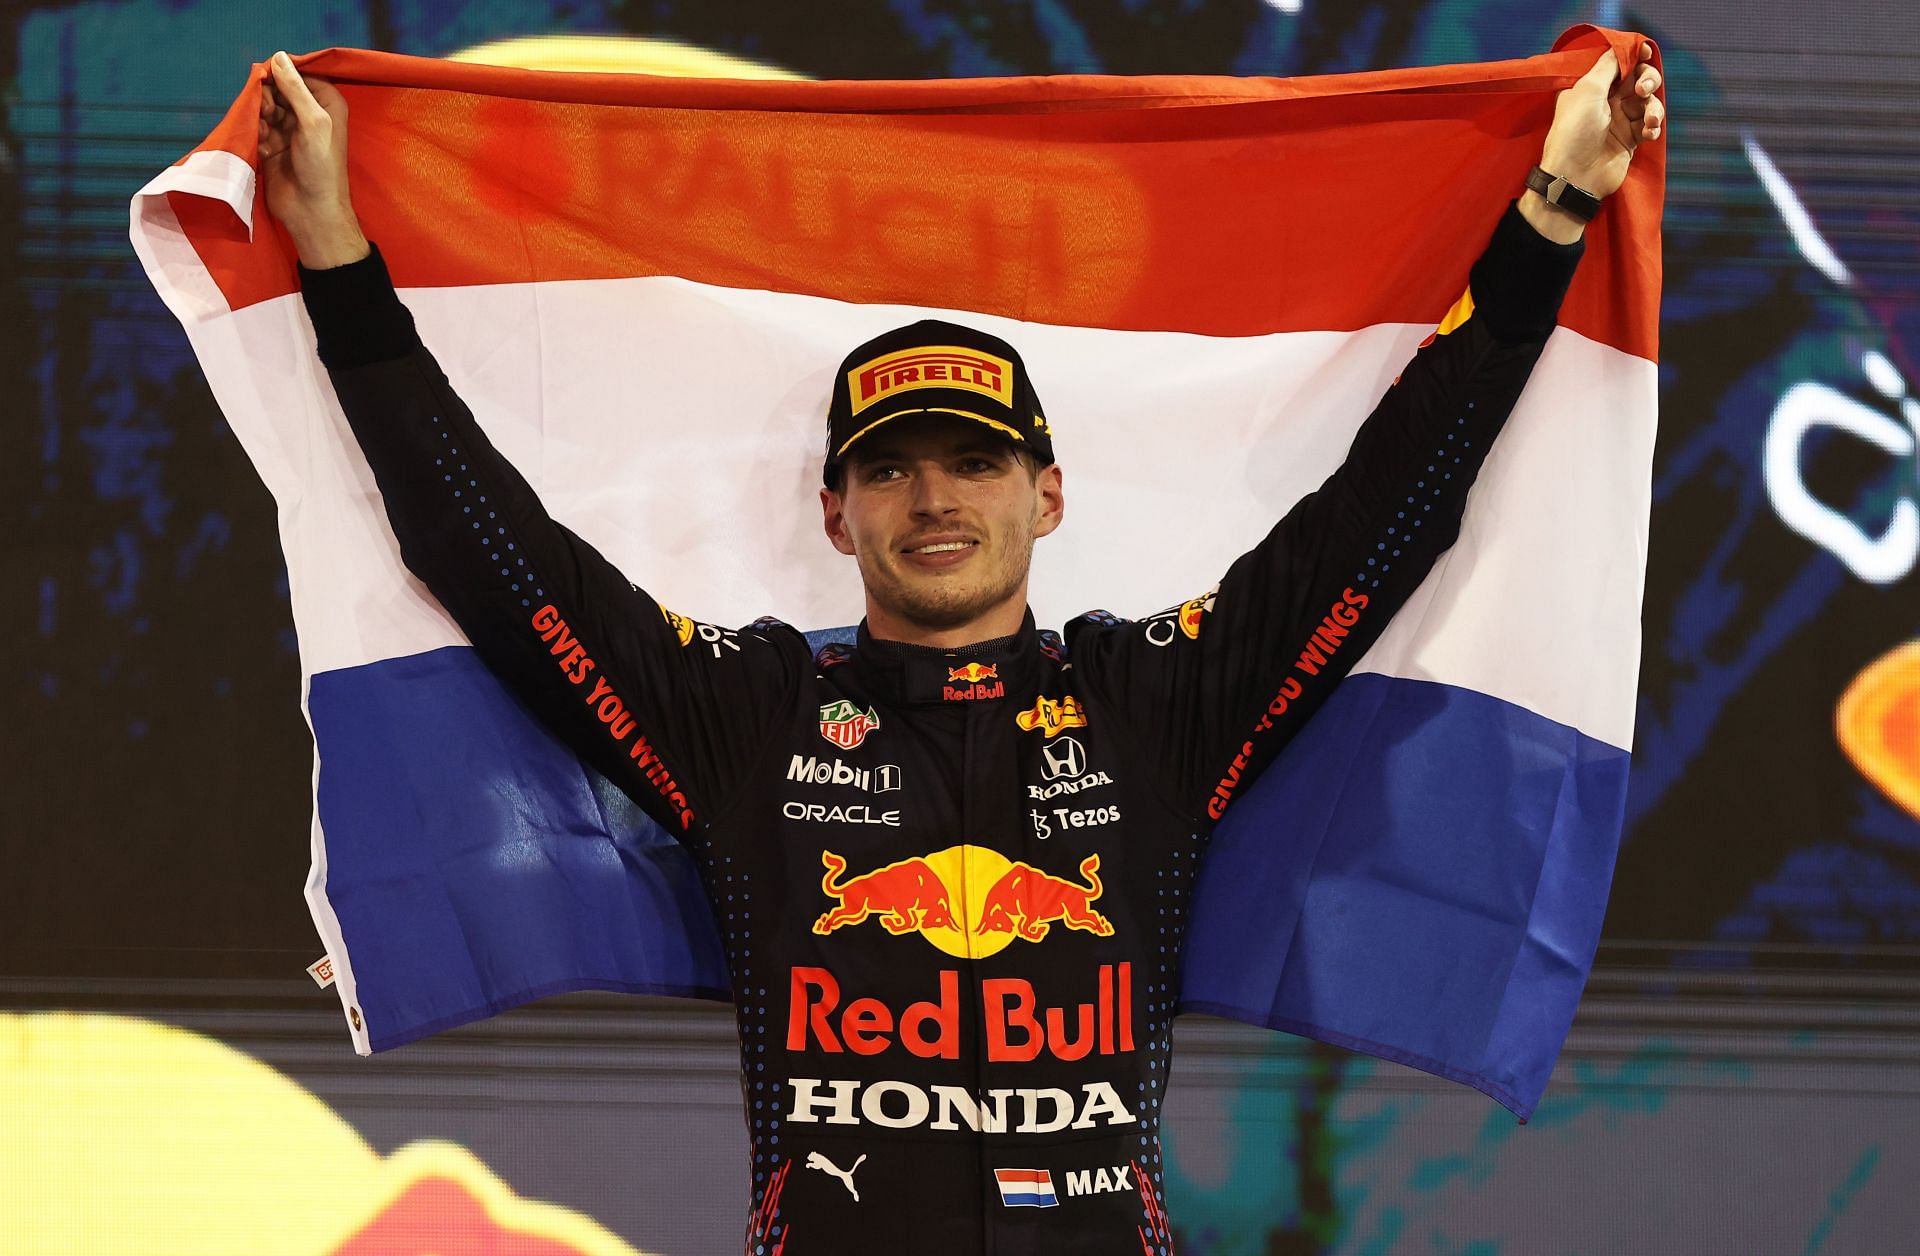 F1 Grand Prix of Abu Dhabi - Max Verstappen hoists the Dutch flag after winning the race